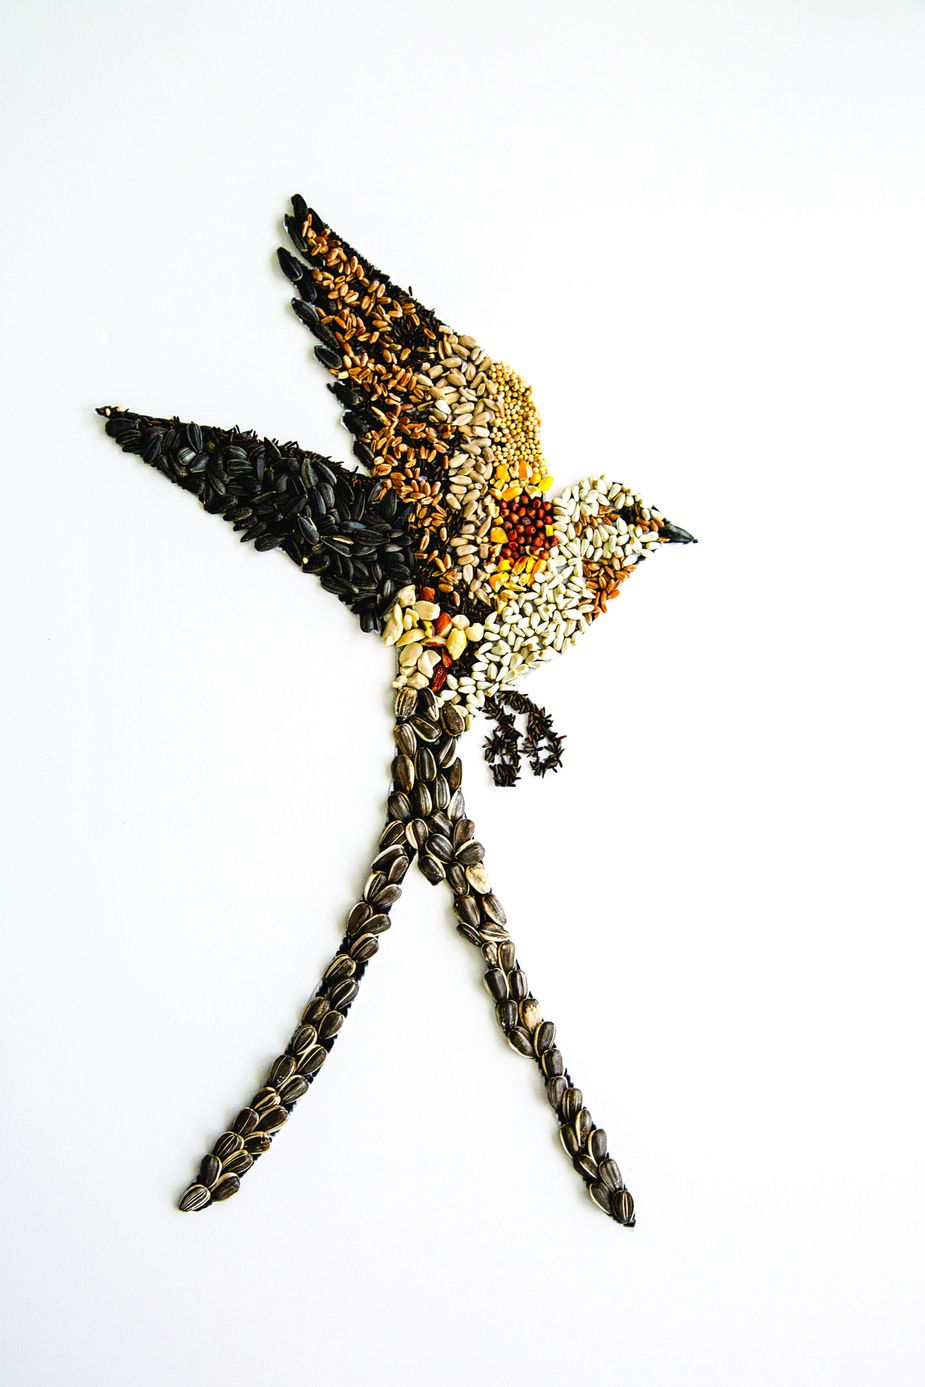 Karlie and Lori's award-winning scissortail flycatcher illustration